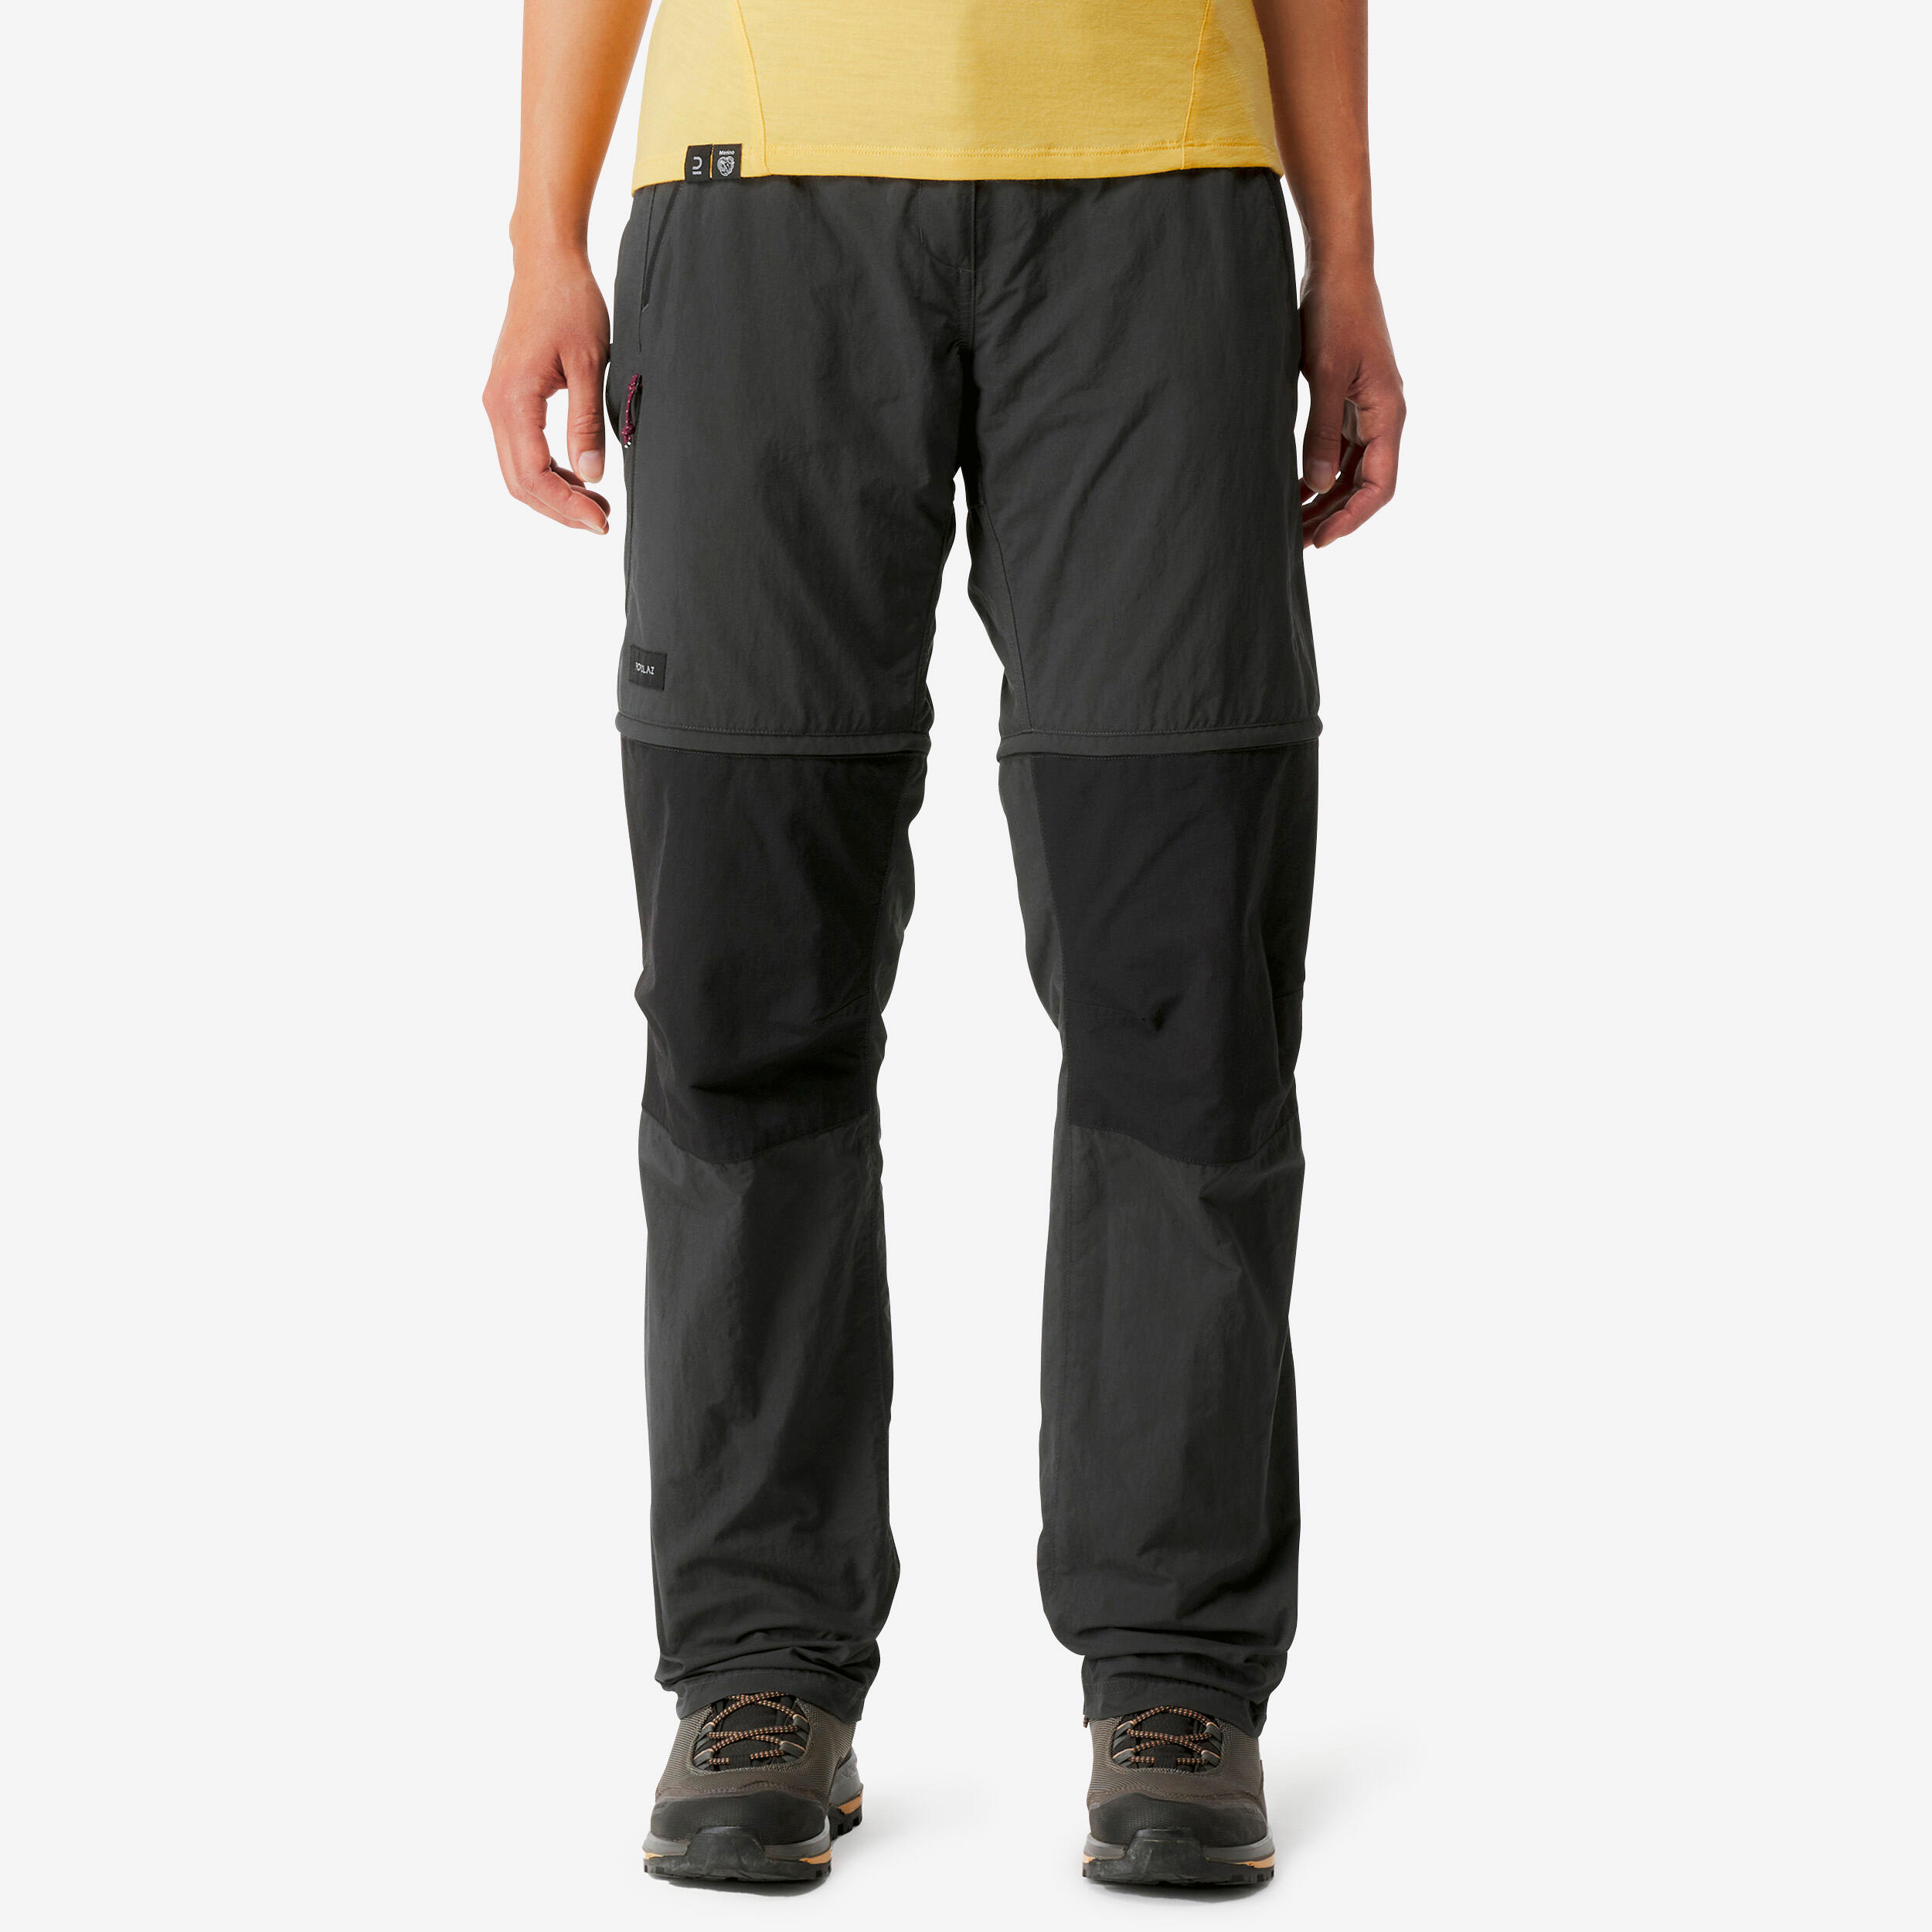 DARE 2B-TUNED IN II ZIP OFF TROUSER BLACK - Hiking trousers